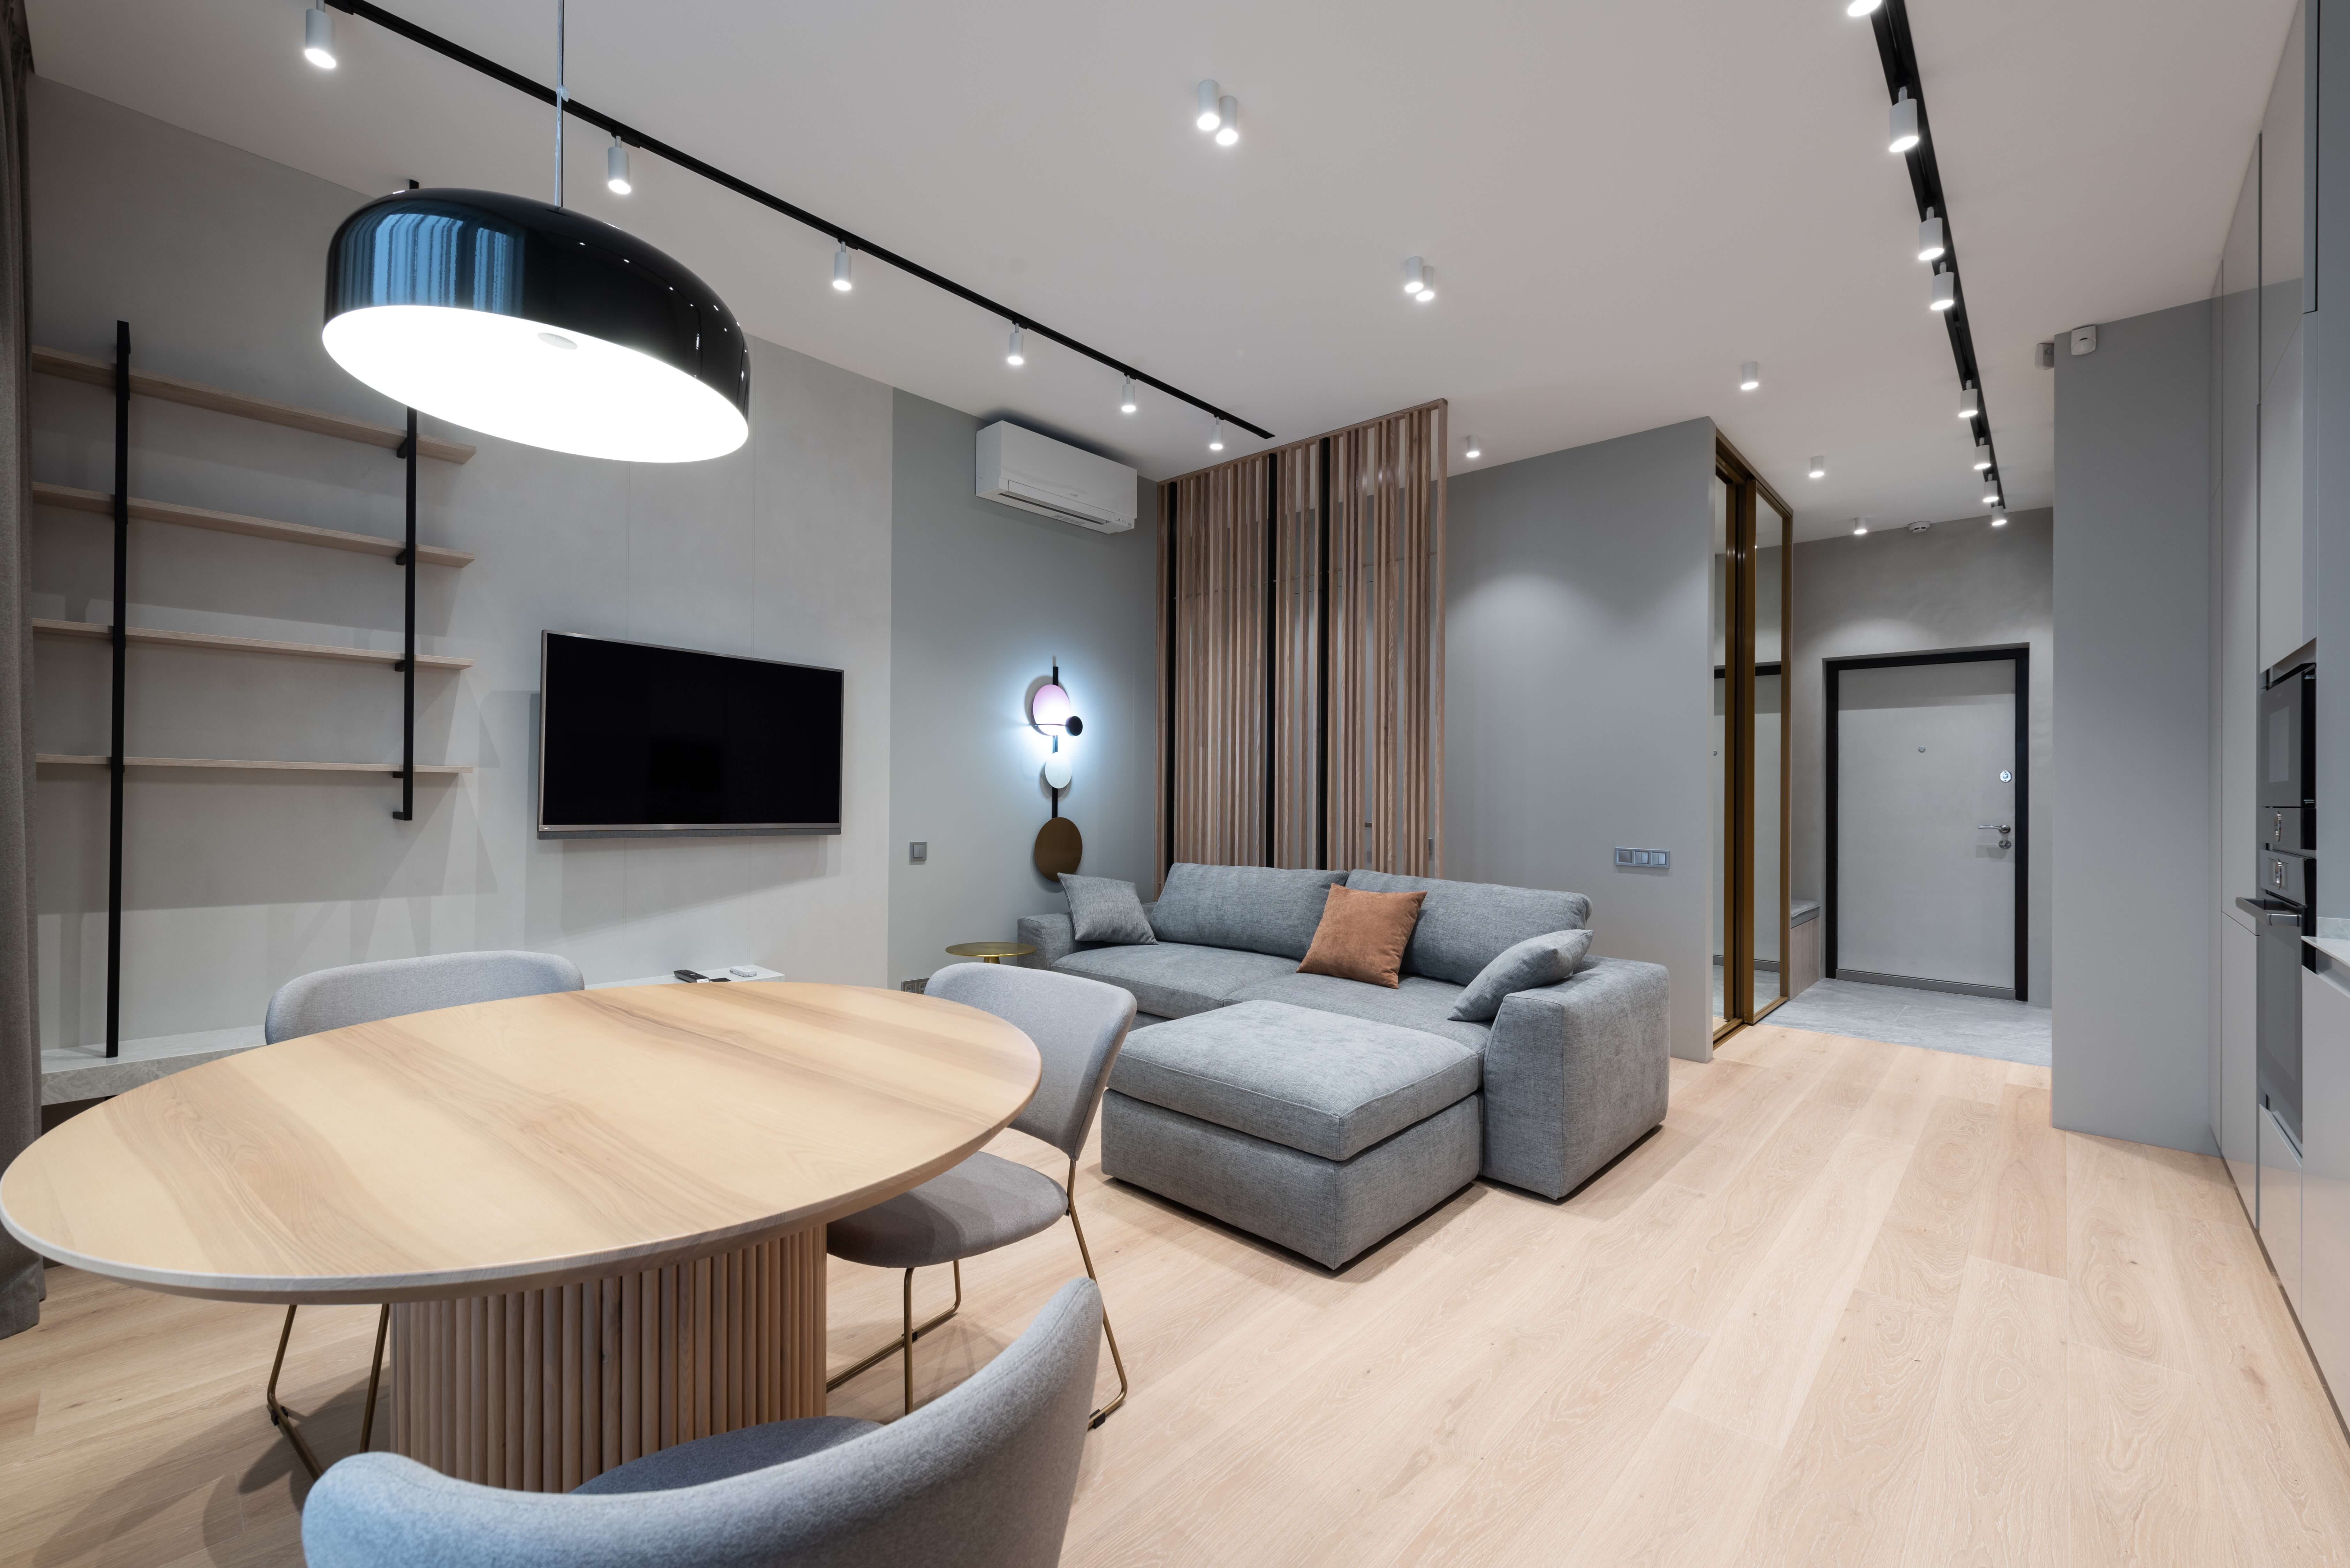 Design de interiores de sala de estar de estilo moderno minimalista